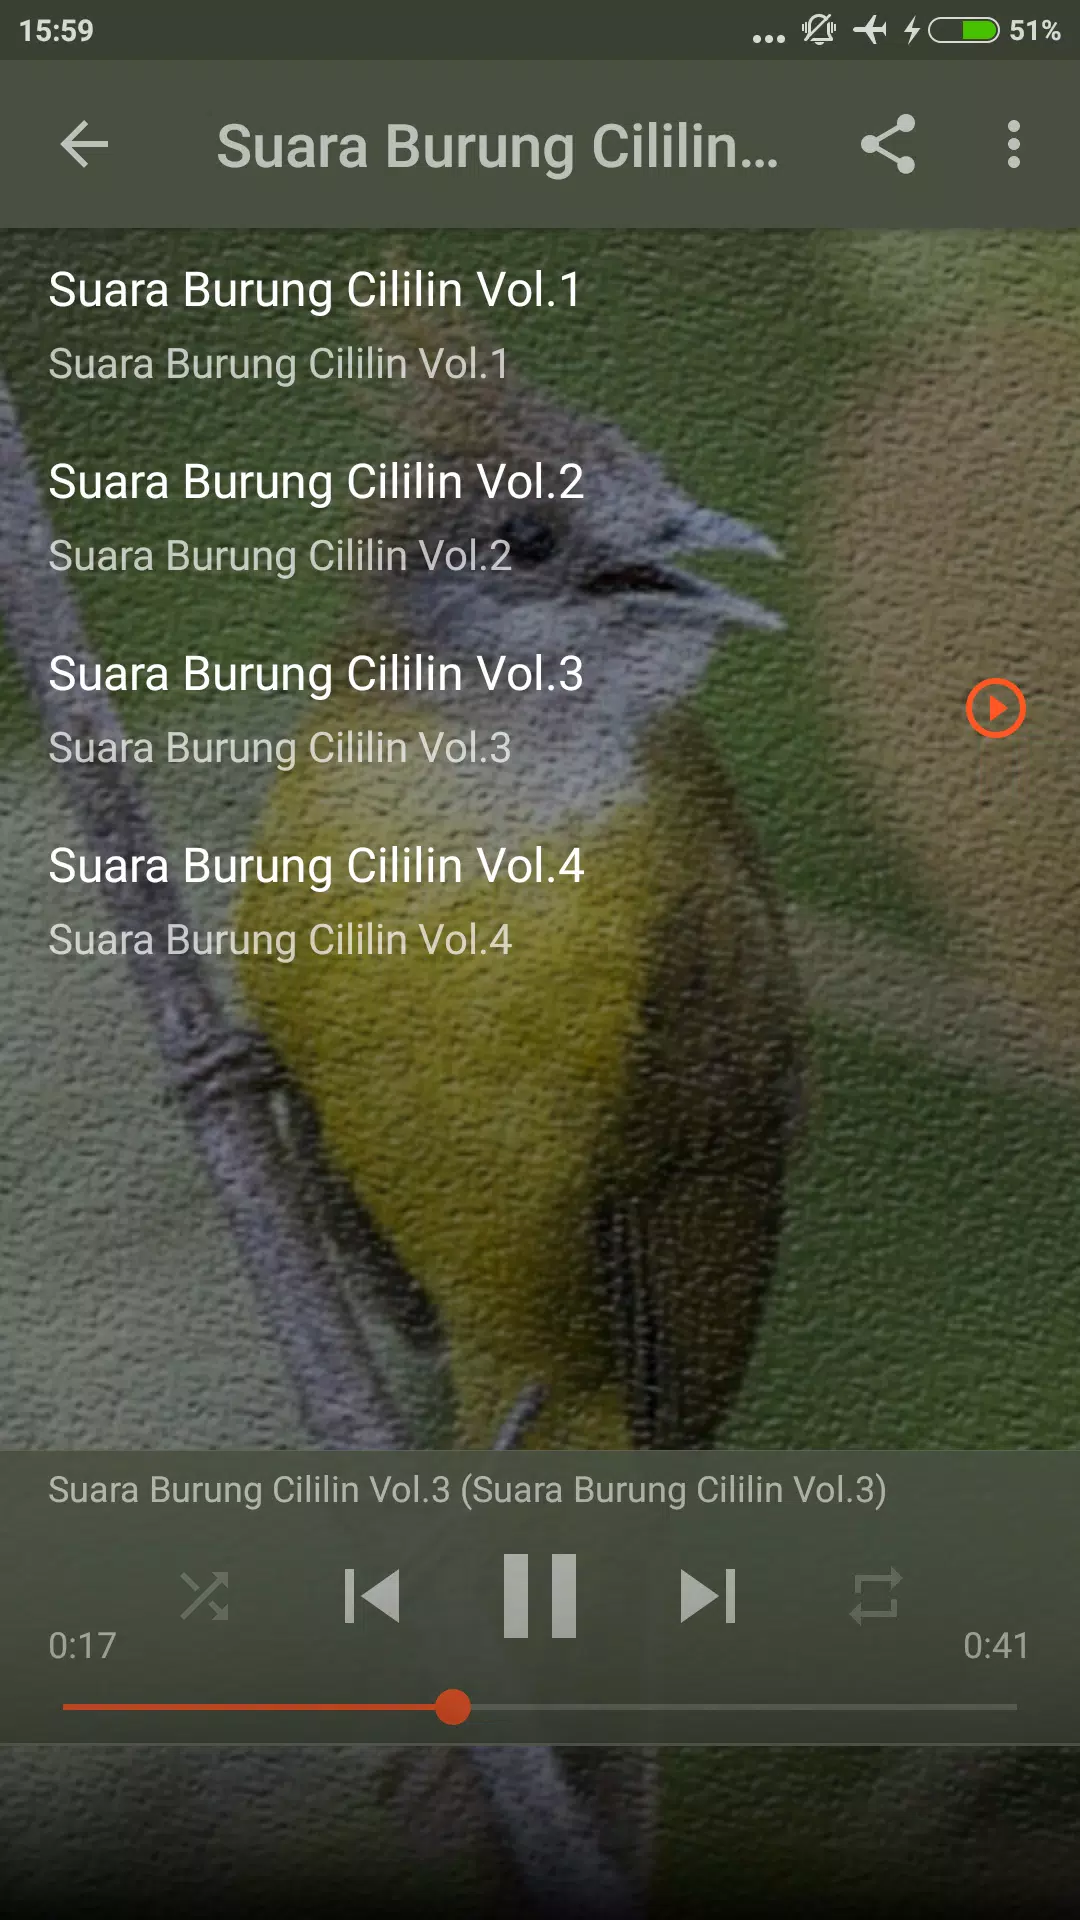 Suara Burung Cililin Vs kapas Tembak for Android - APK Download